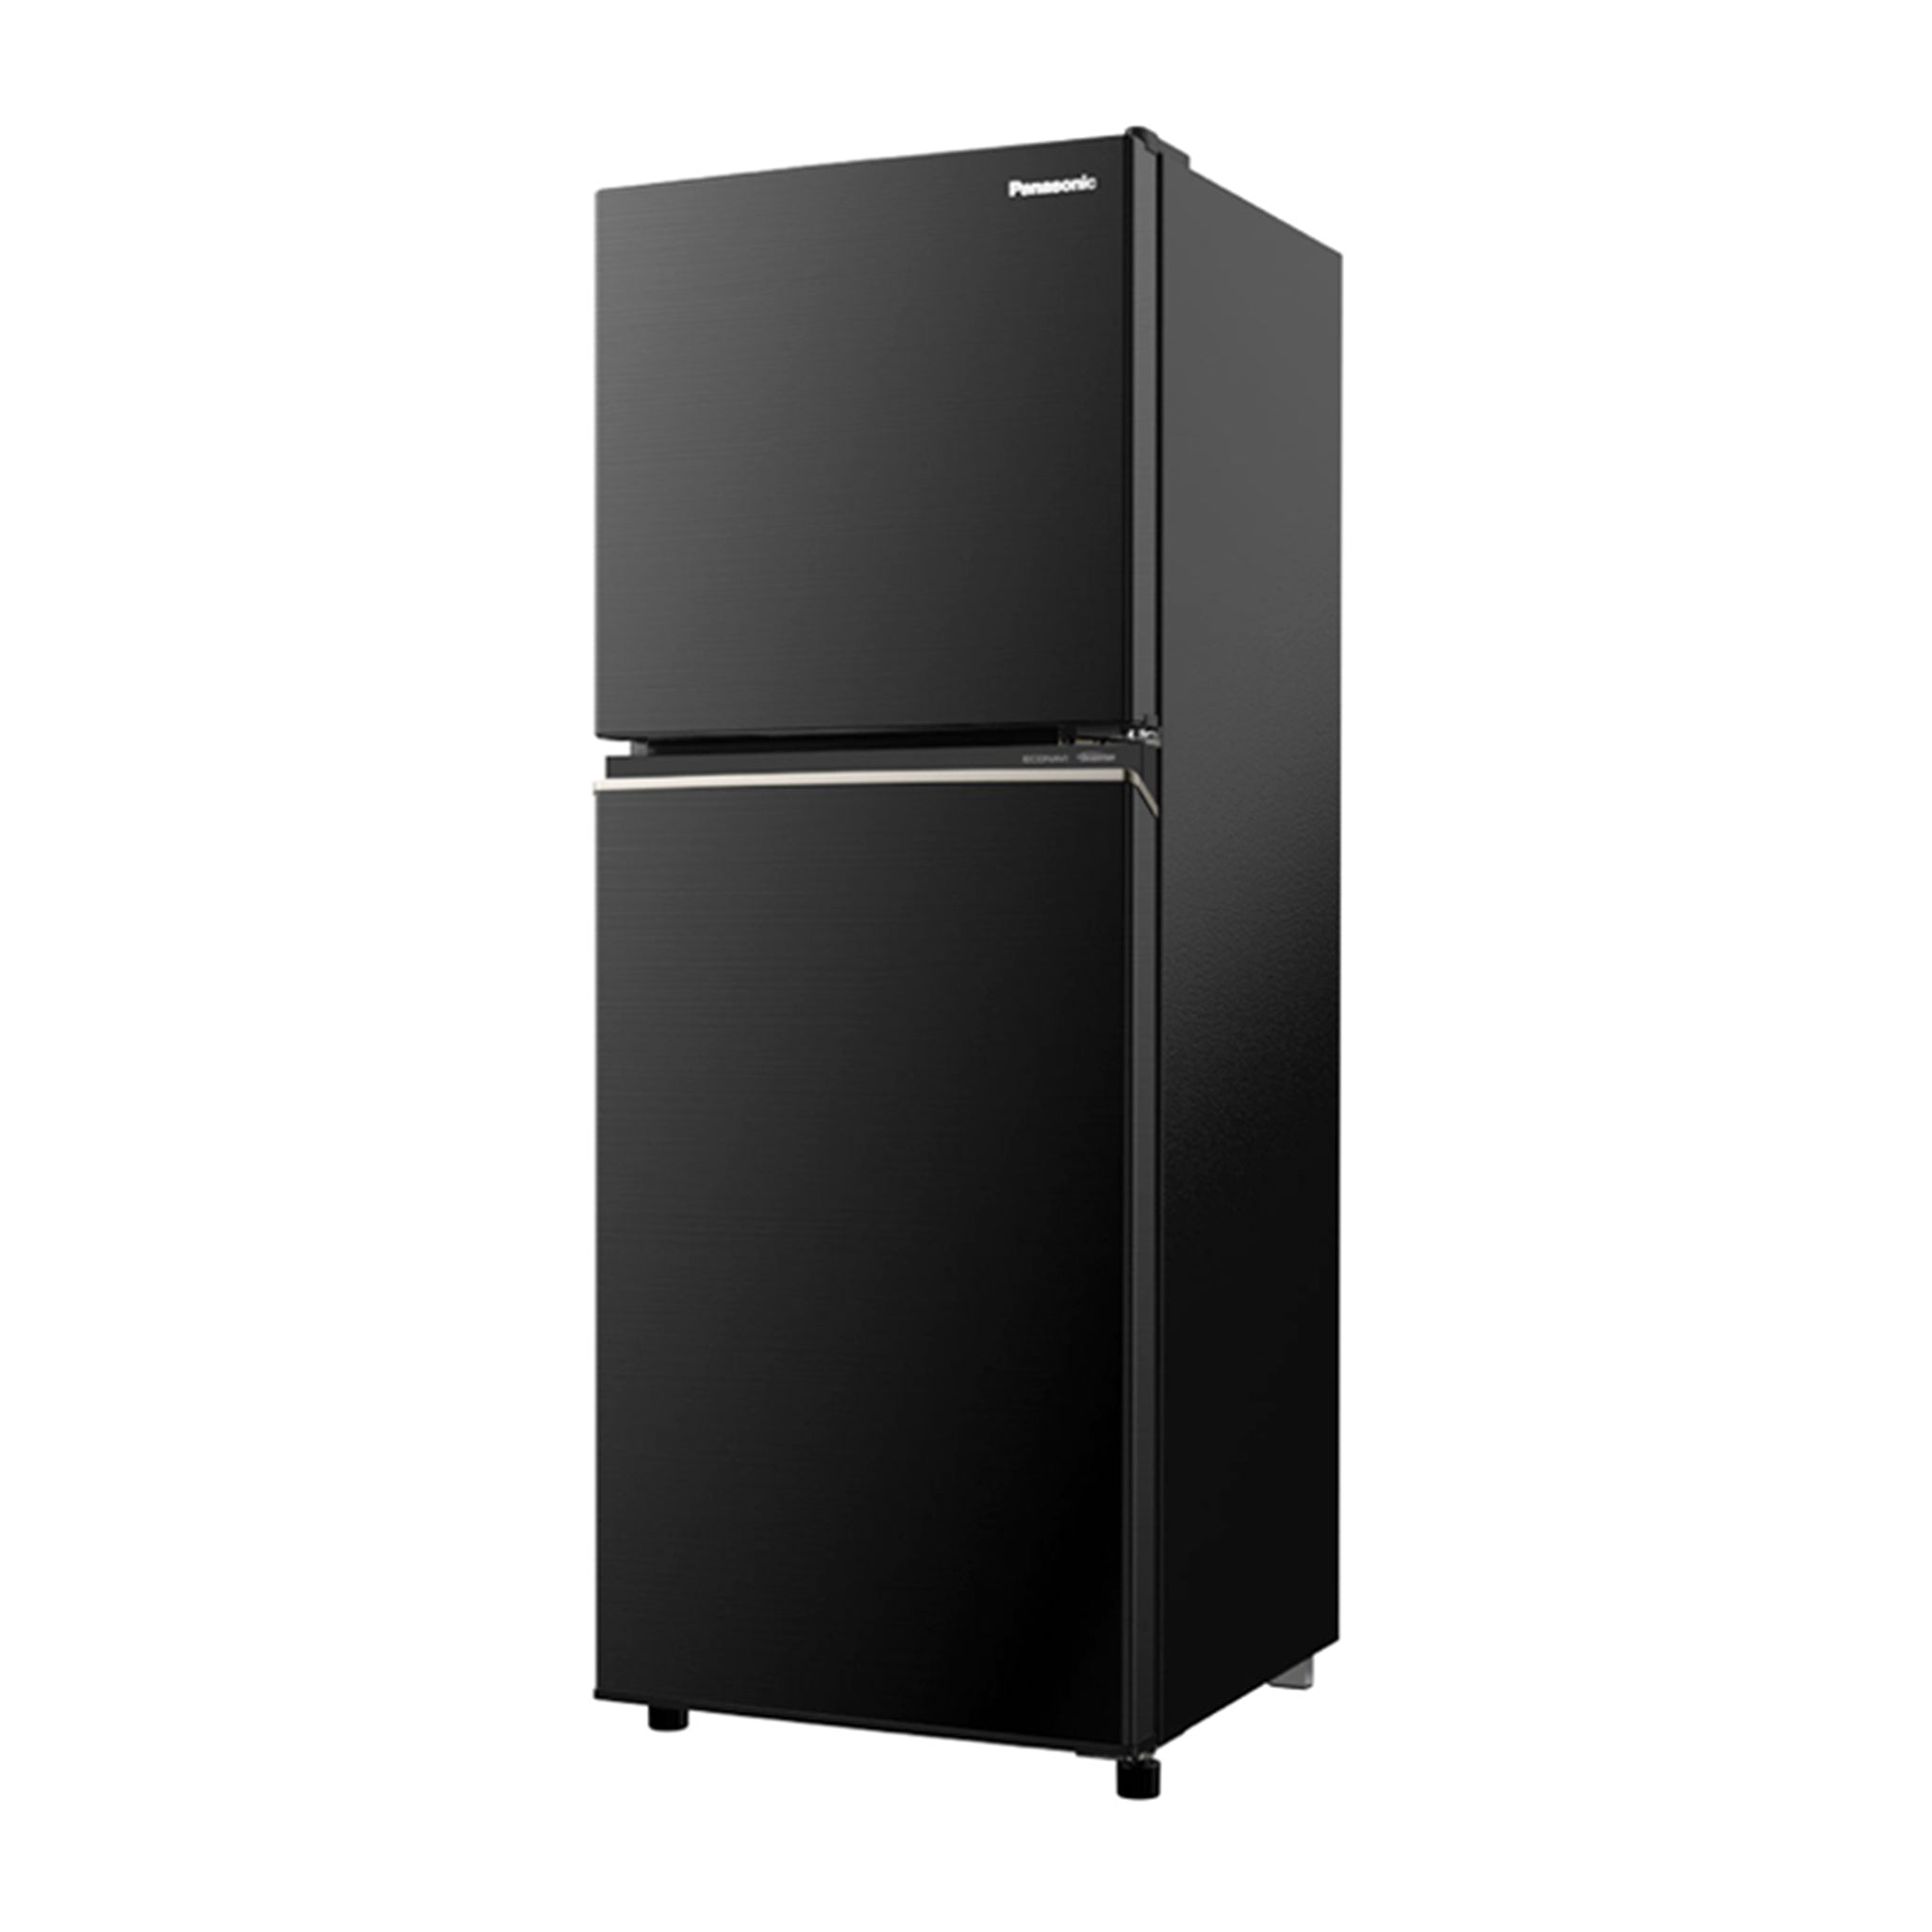 PANASONIC NR-BP272VD 2-Door Top Freezer Fridge No Frost Inverter Refrigerator Panasonic